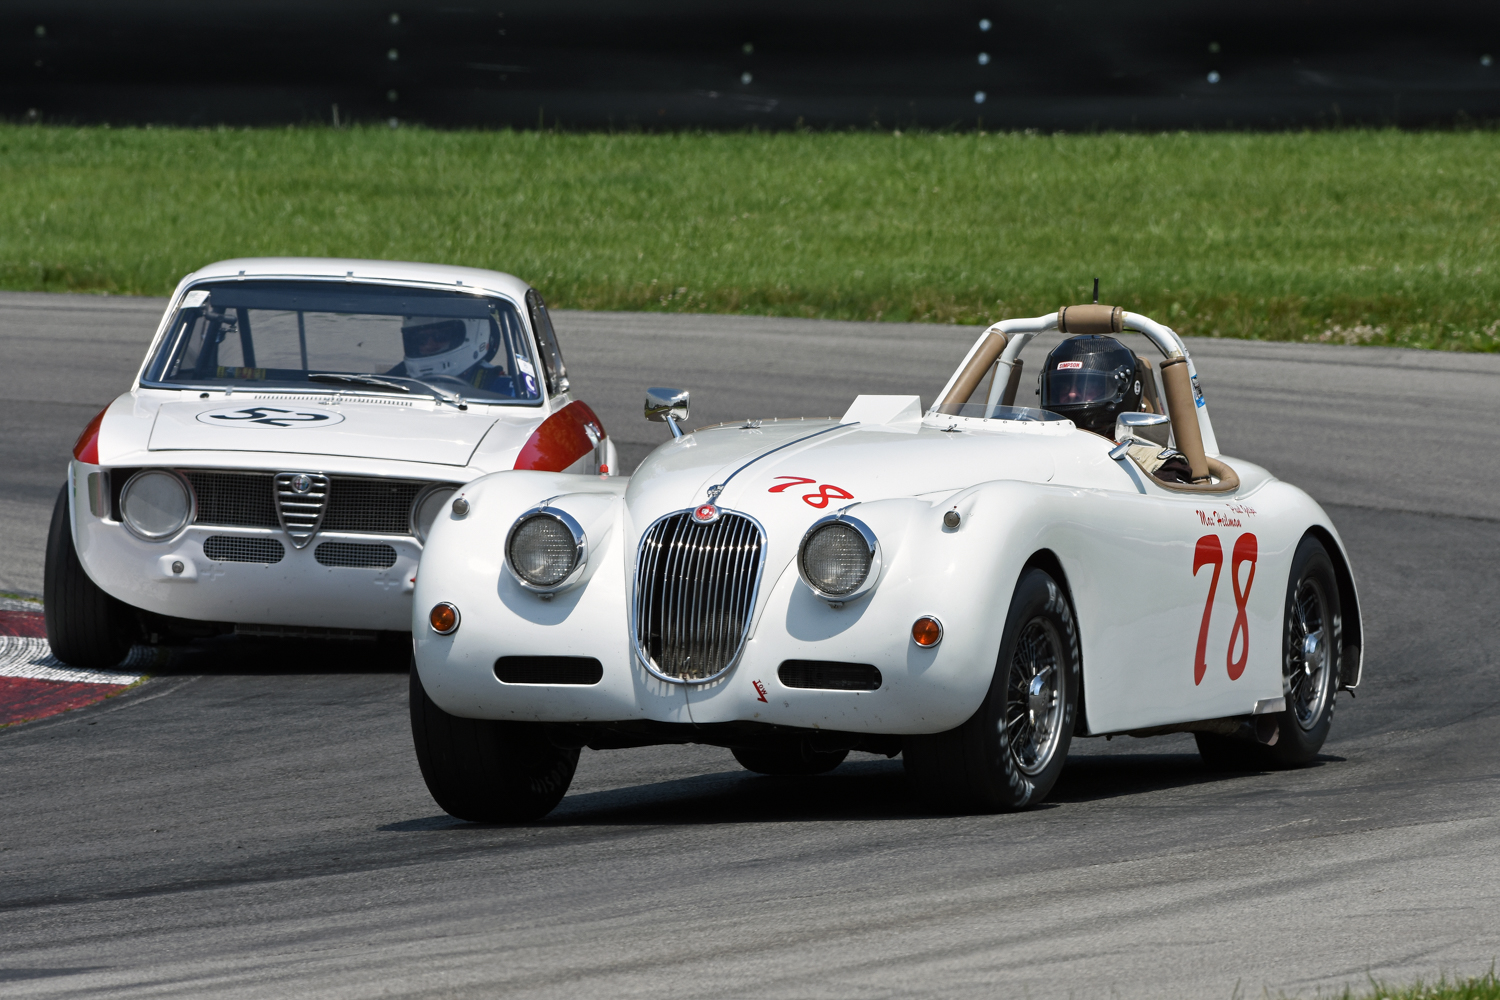 2021 Mid Ohio Vintage Grand Prix- SVRA J. Hatfield